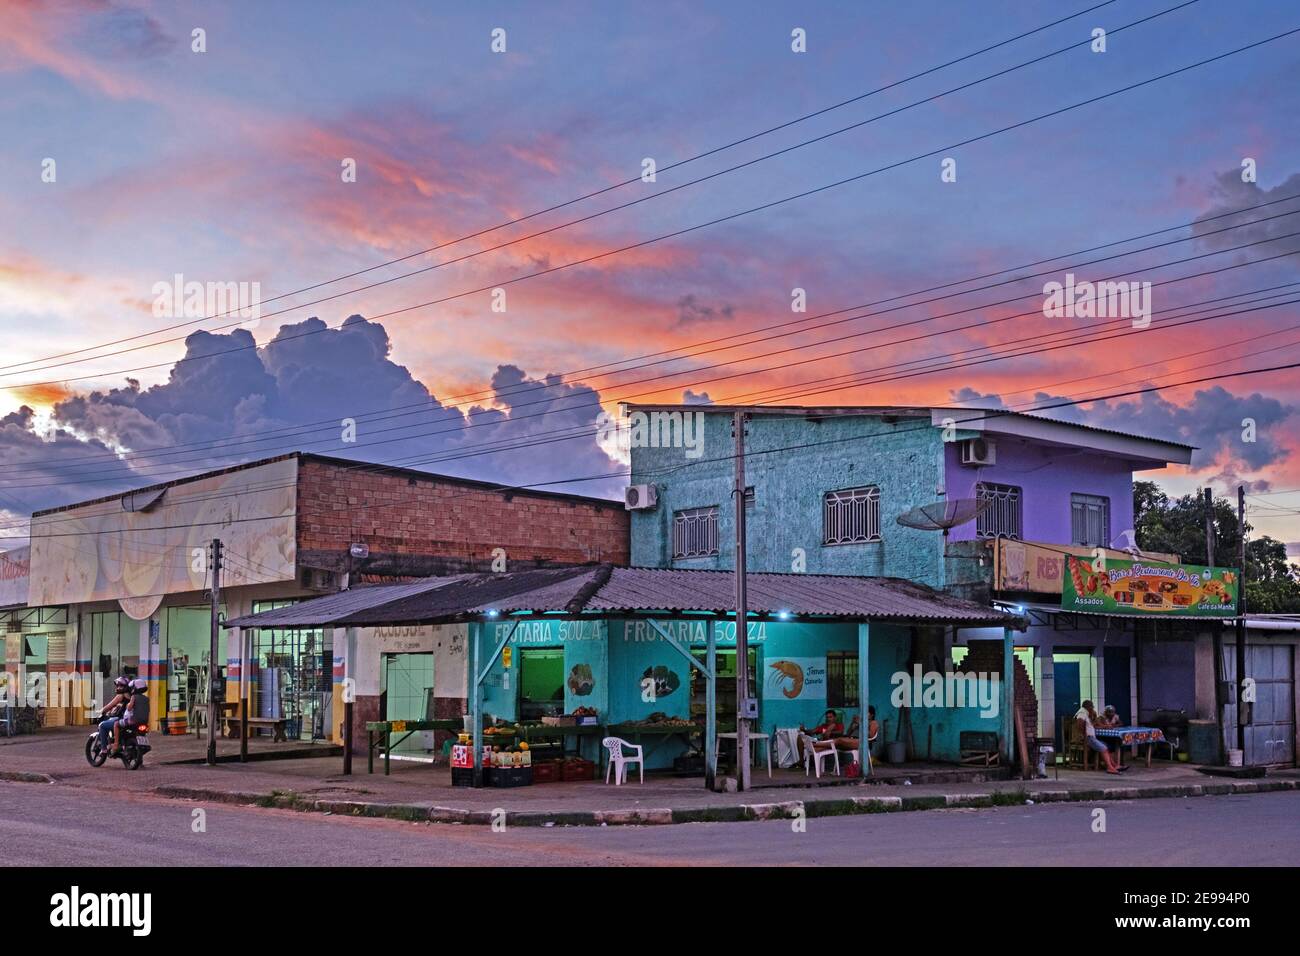 Shops, bars and restaurants in the village Rorainópolis at sunset along route 174, Roraima, Amazon region, Brazil Stock Photo